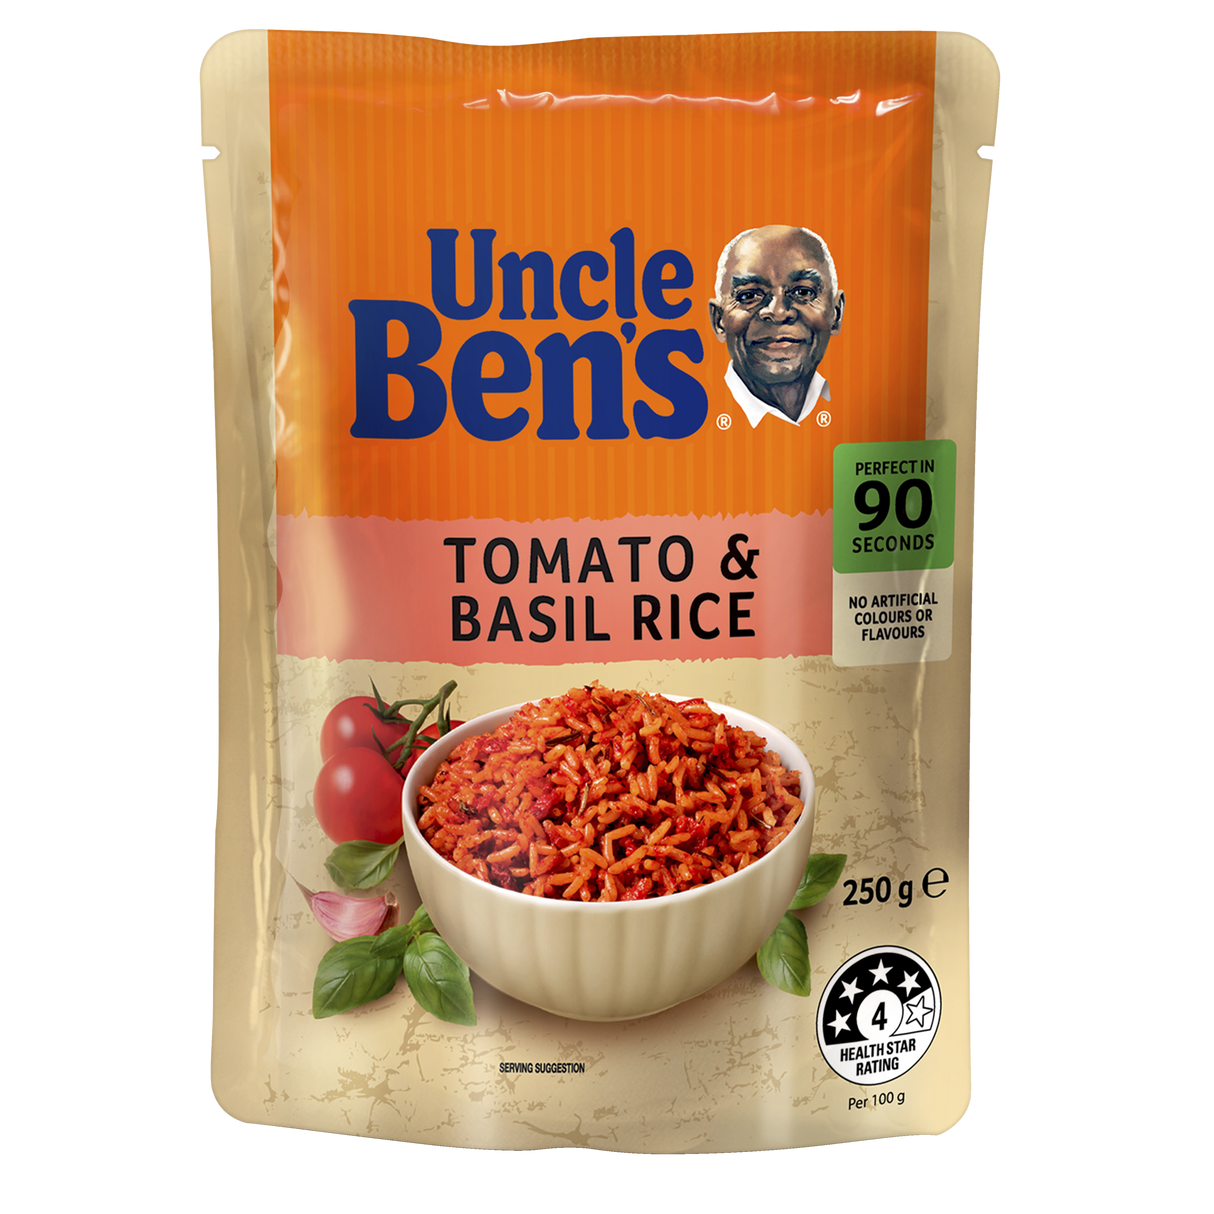 Ben's Original Tomato & Basil Rice Microwave Pouch 250g